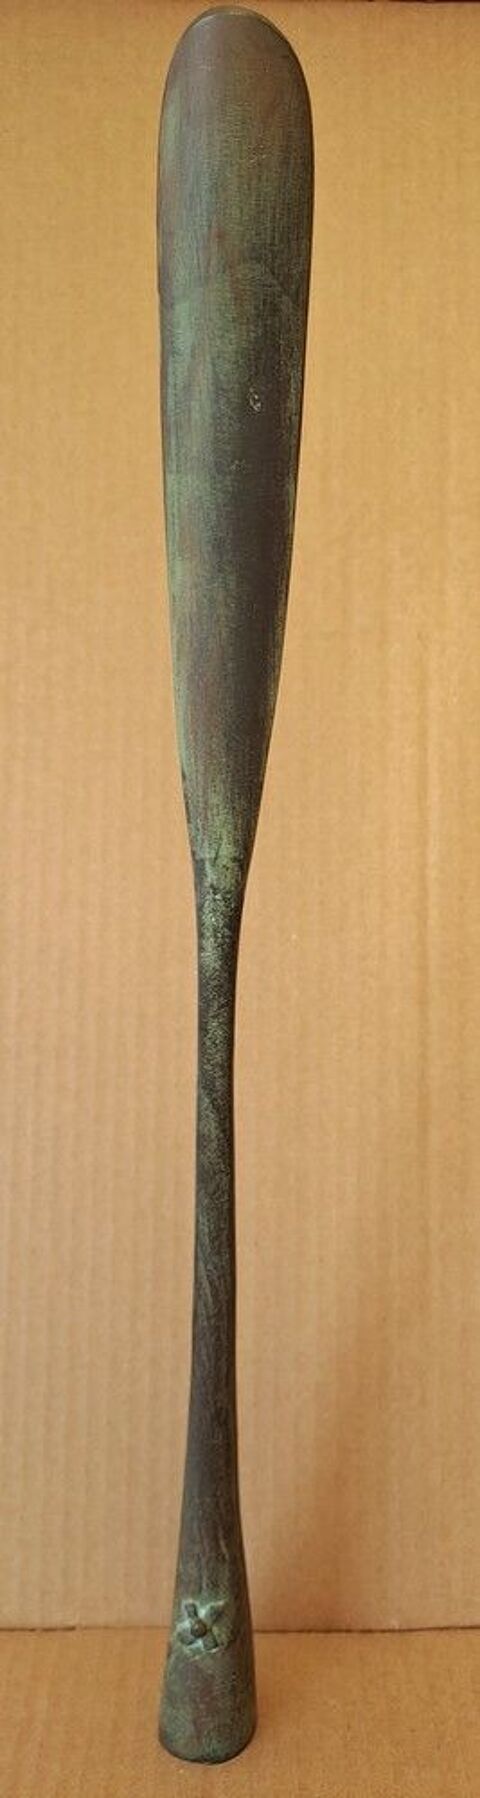 Sculpture chausse-pied totem en bronze 150 Hergnies (59)